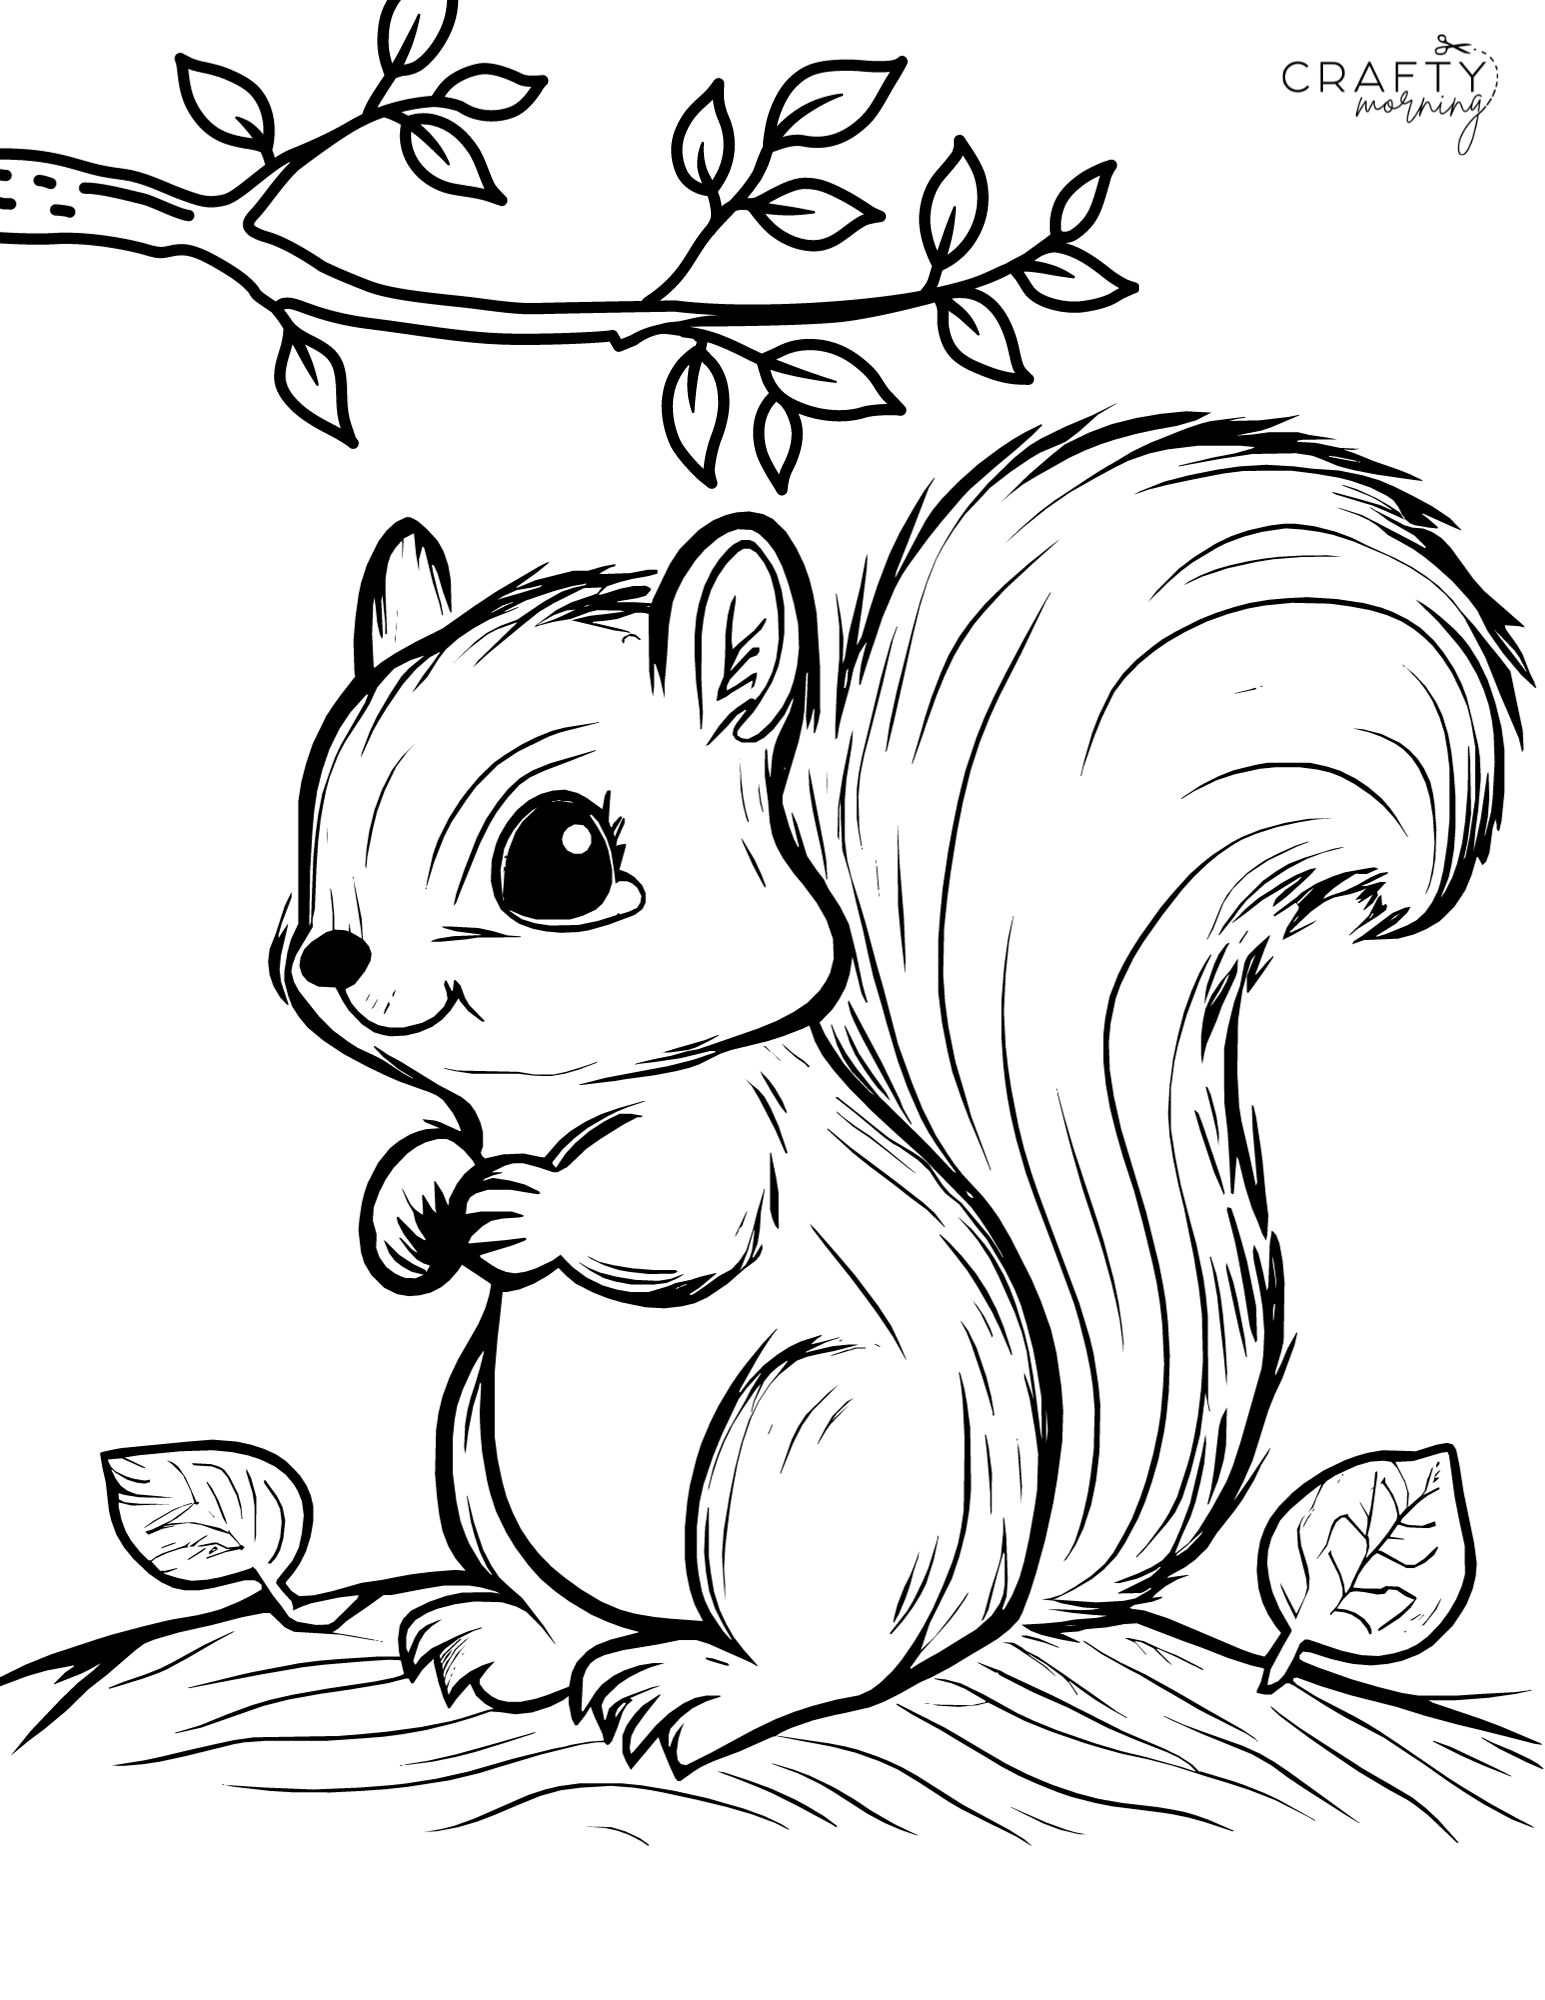 Illustration of squirrel Free Stock Vectors